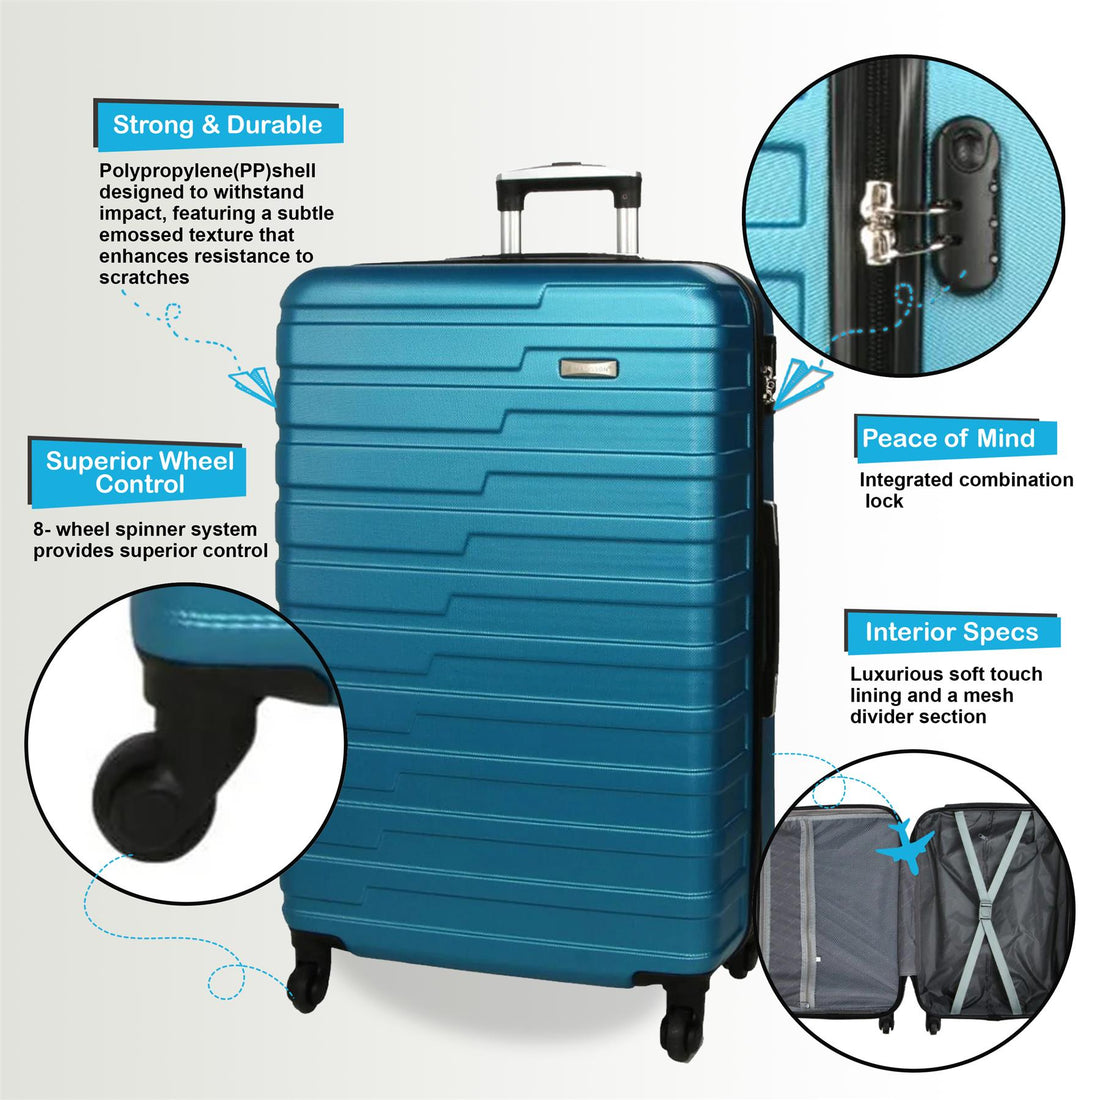 Crossville Cabin Hard Shell Suitcase in Blue